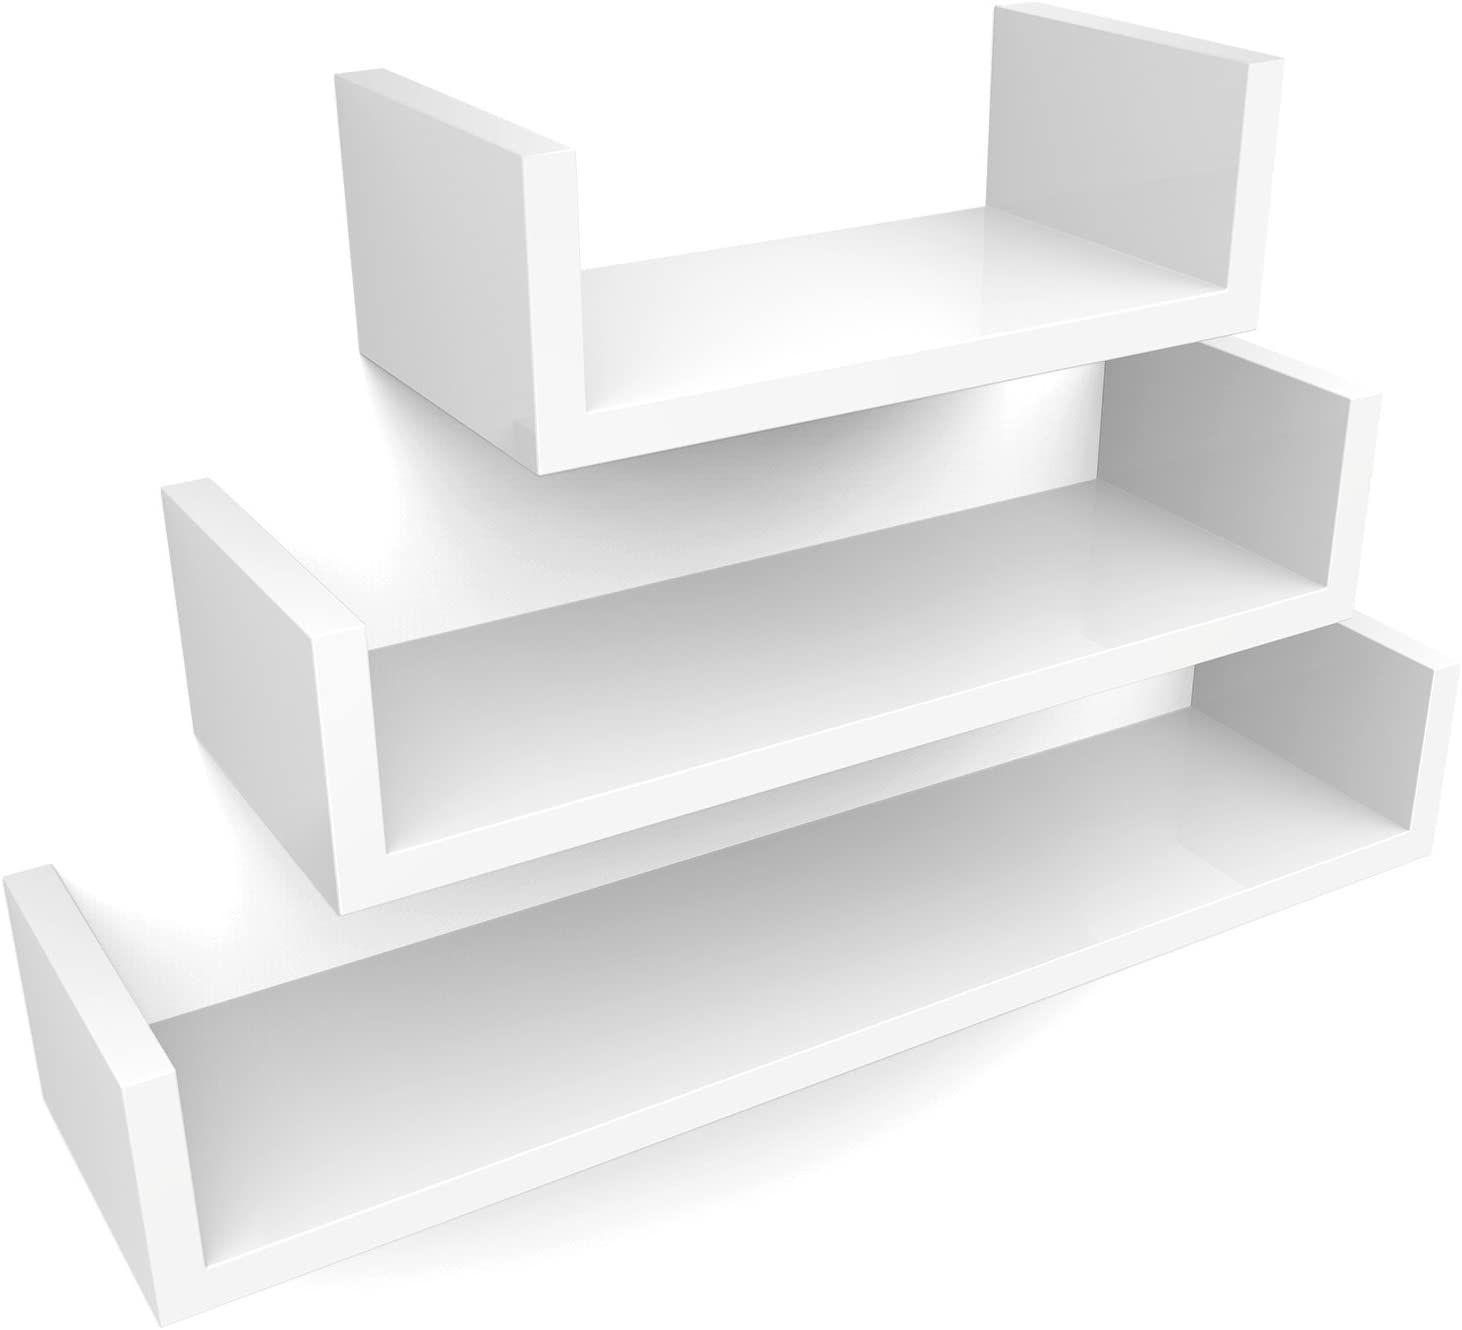 Wandplank – Muurplank – MDF – 60 x 10 x 15 cm – Wit – Set van 3 stuks